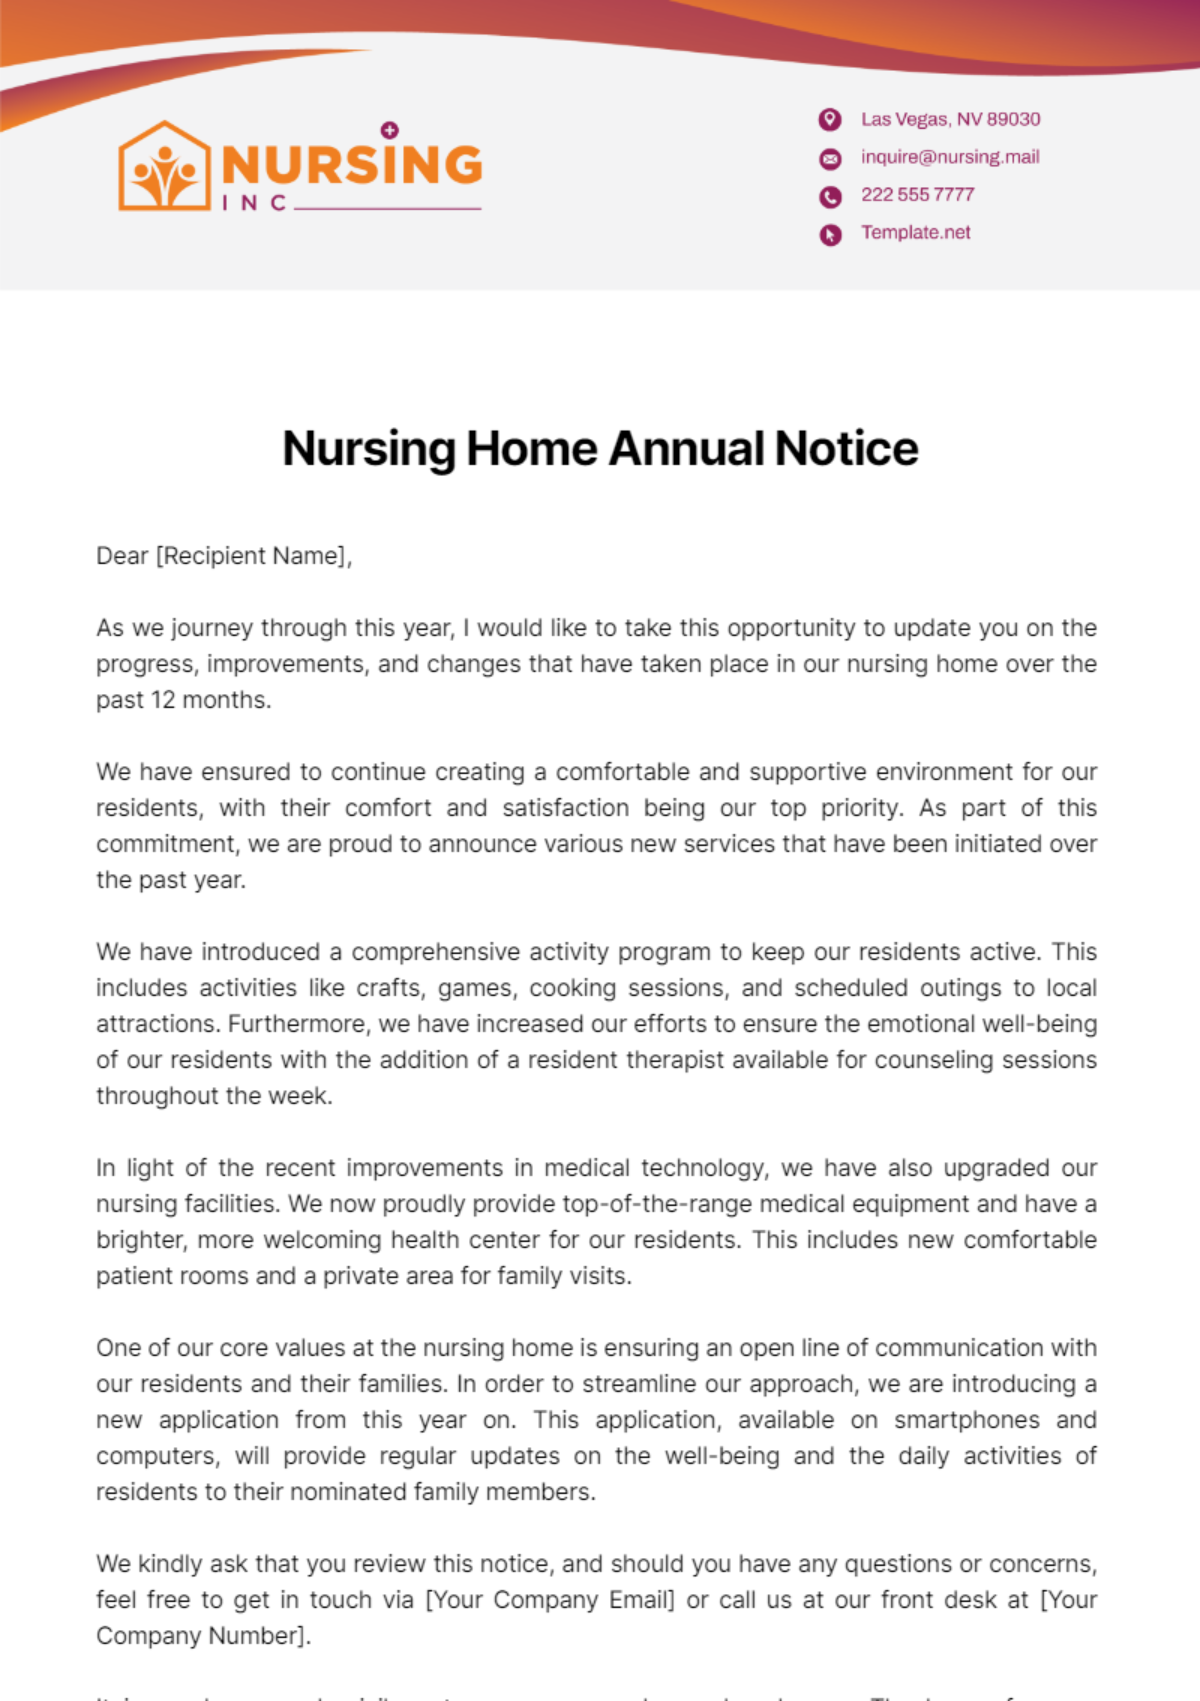 Nursing Home Annual Notice Template